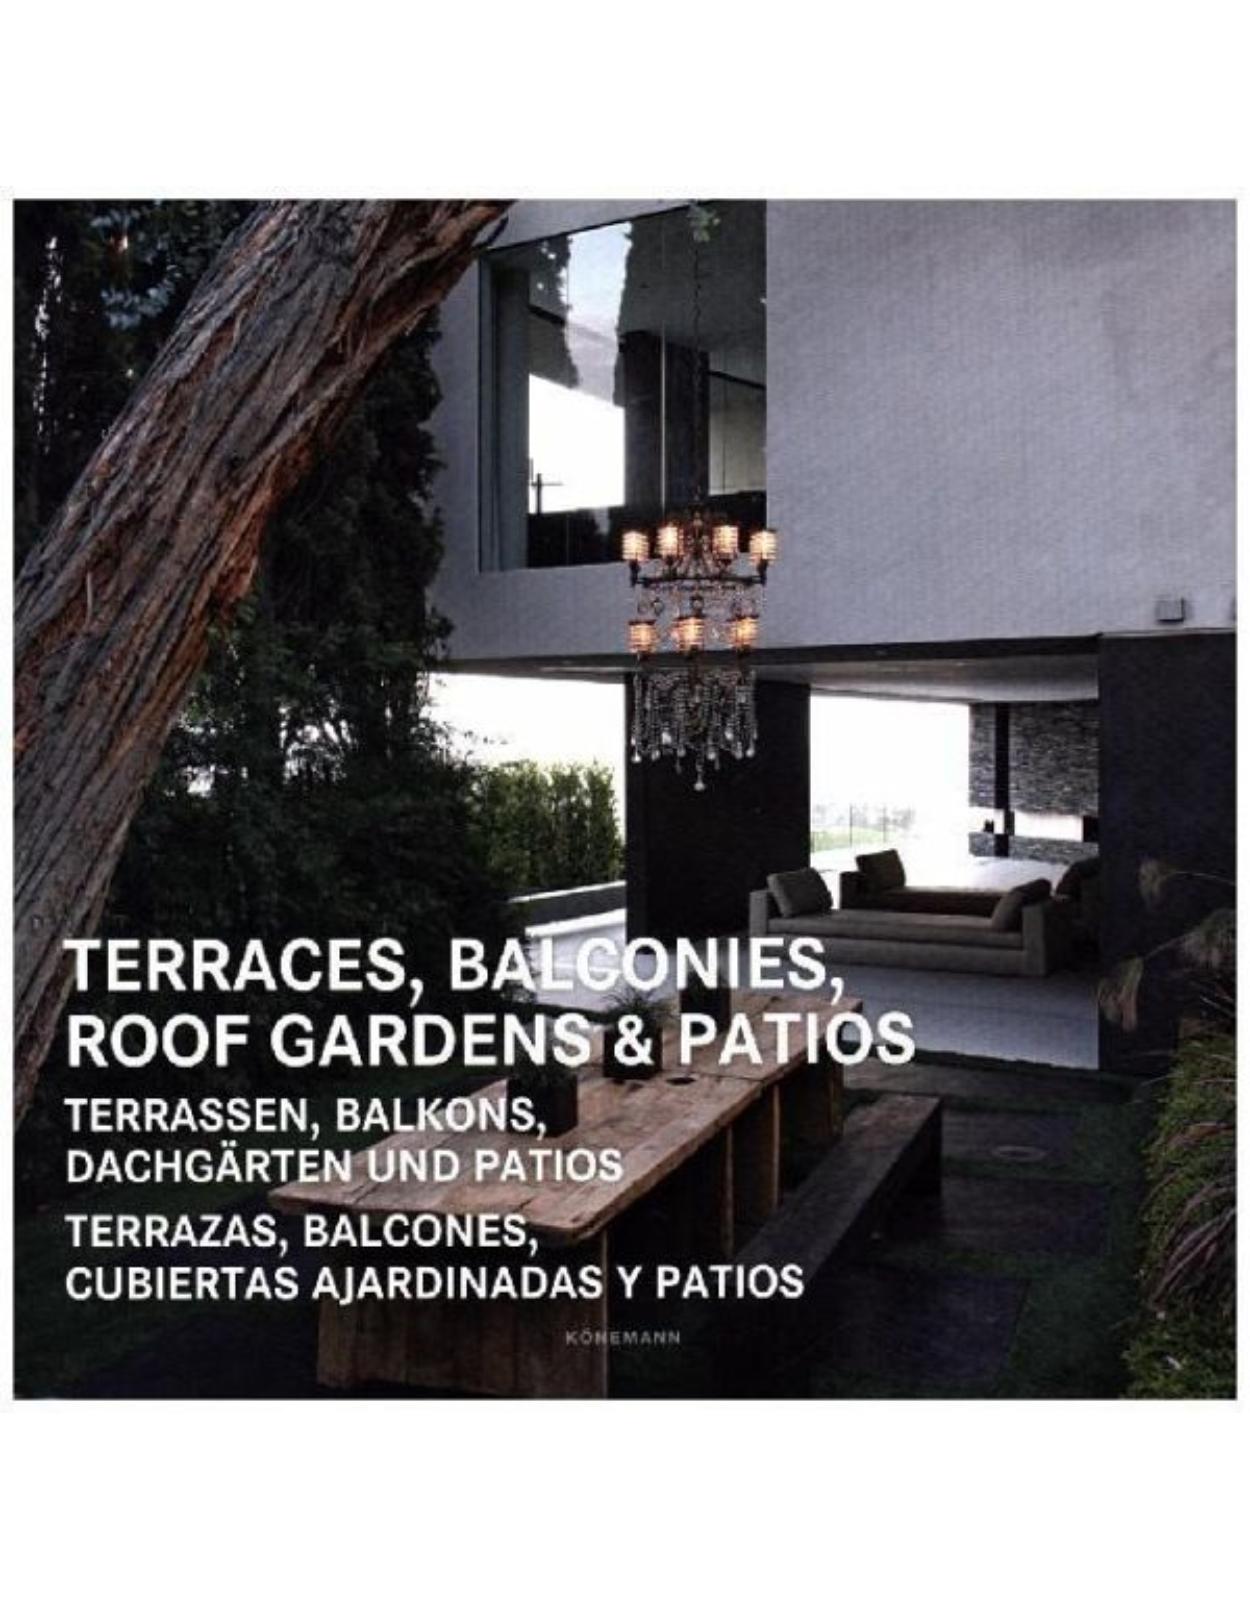 Terraces, balconies, roof gardens& patios